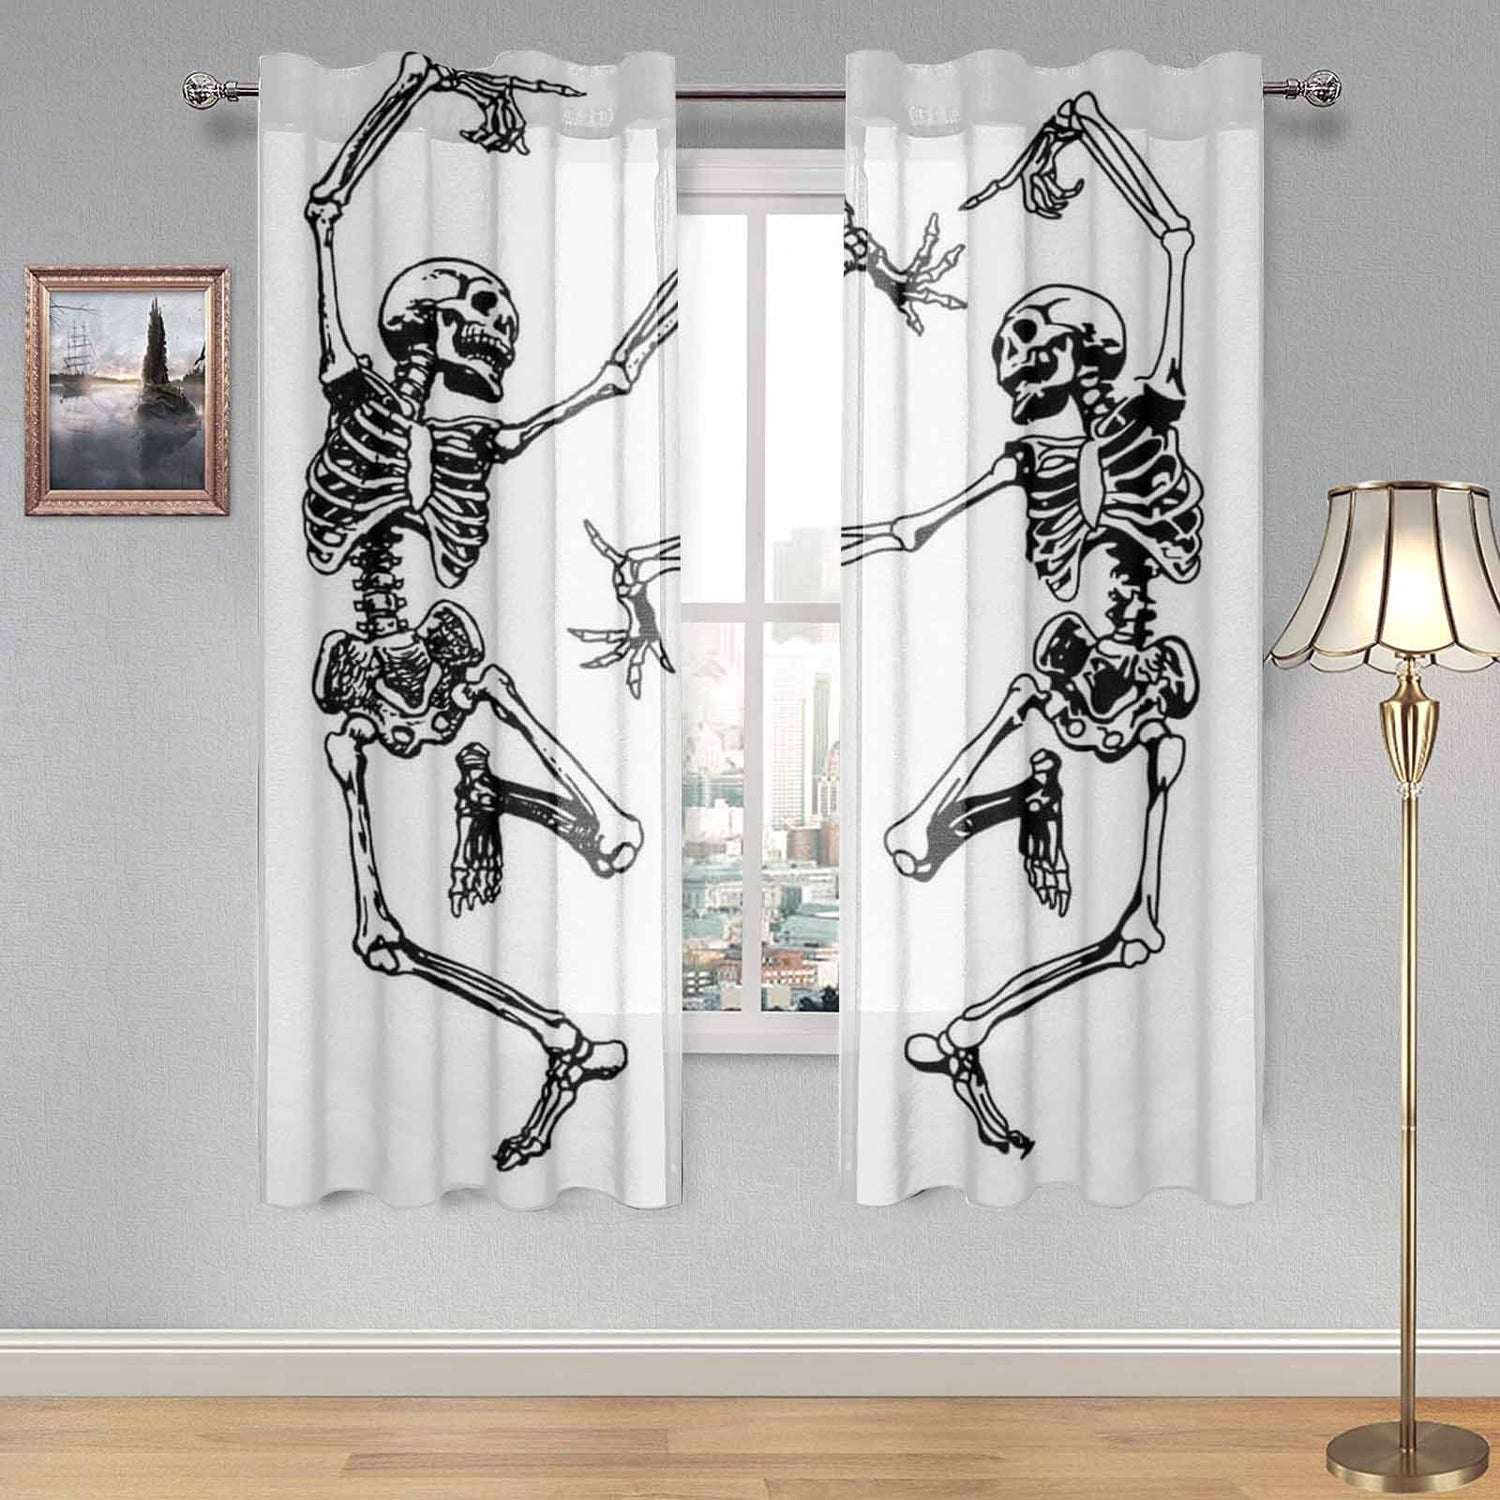 Sheer 2-Panel Window Curtains in Monochrome Dancing Skeletons